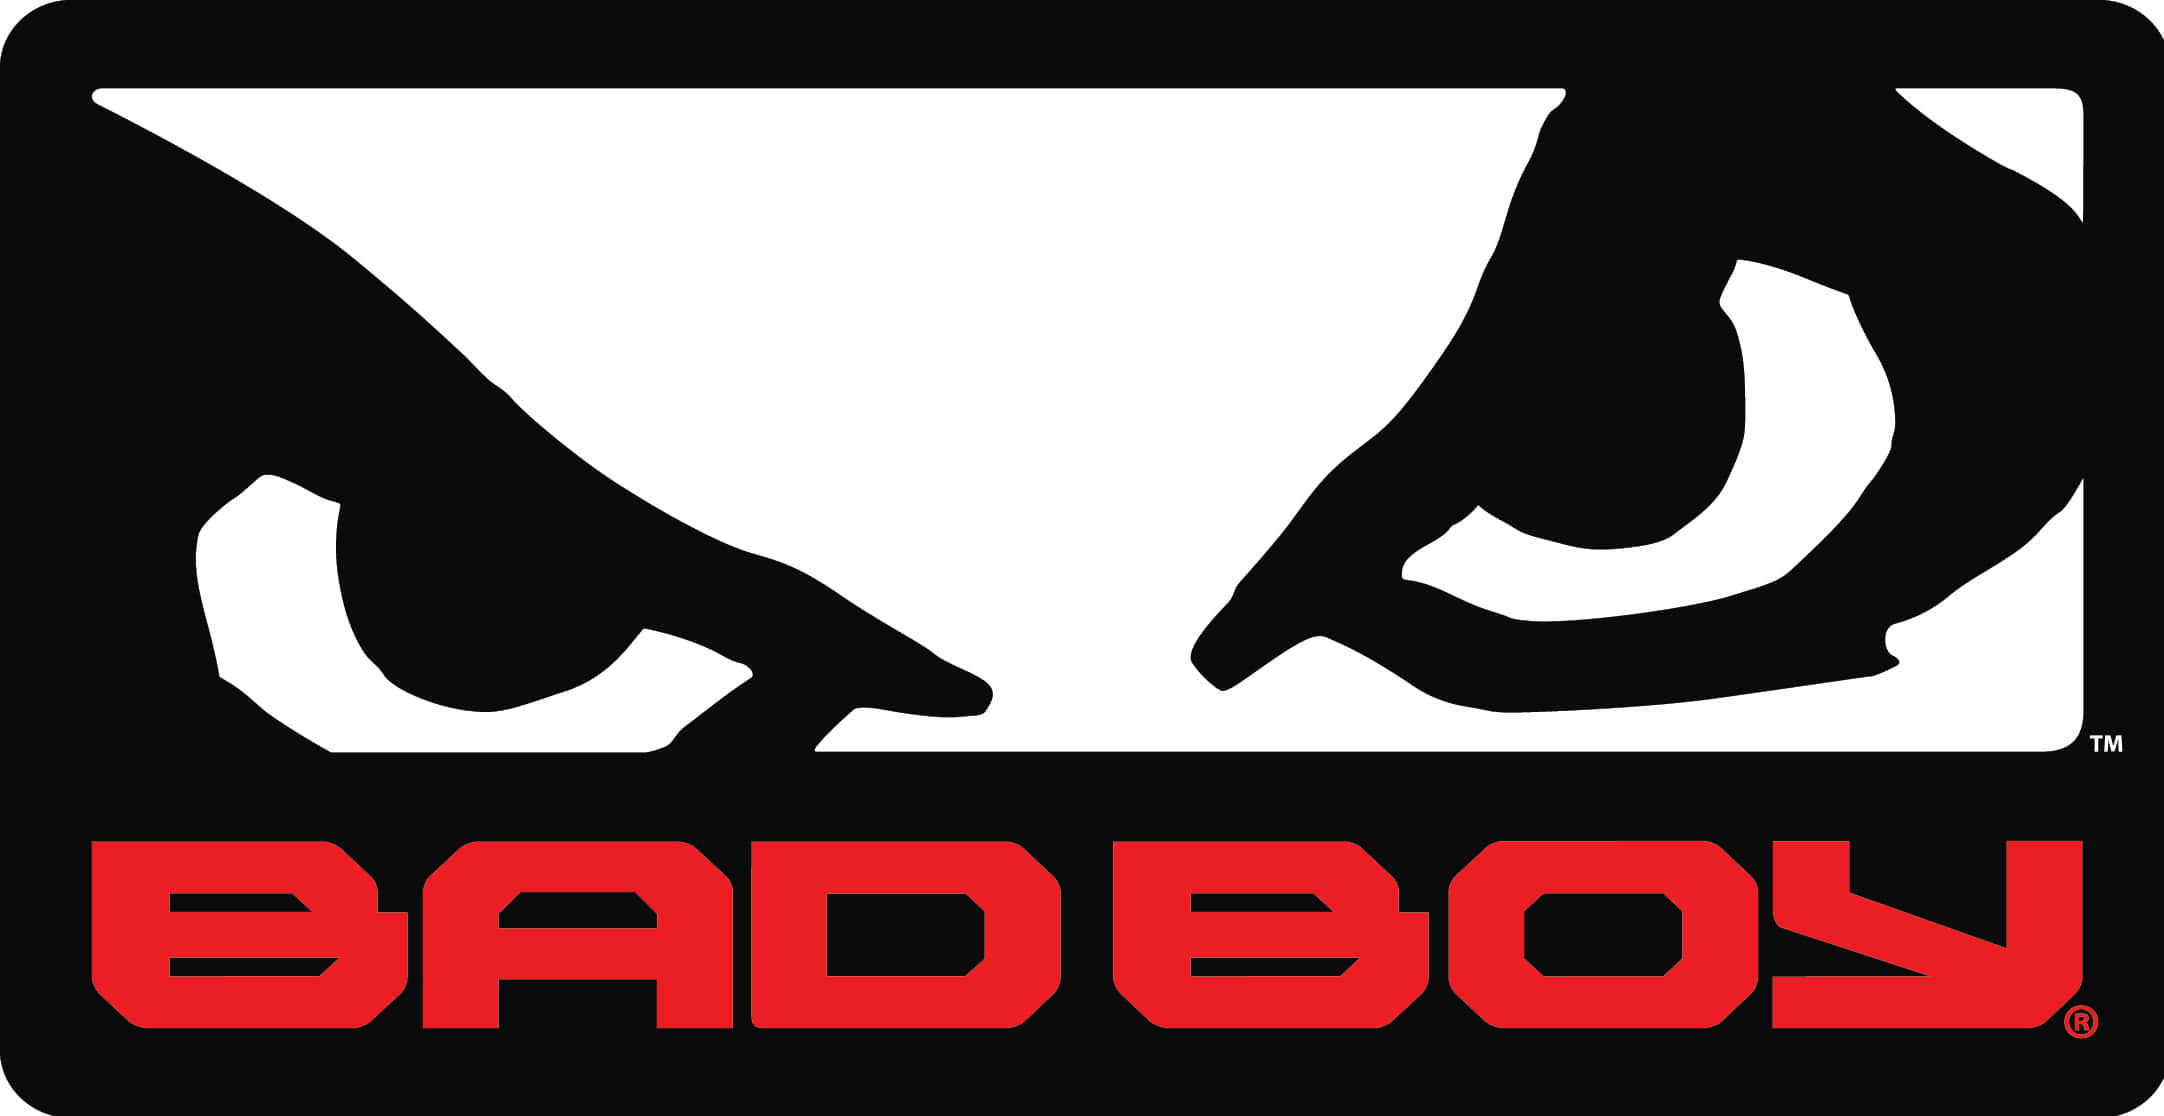 Premium Vector | Bad boy logo design